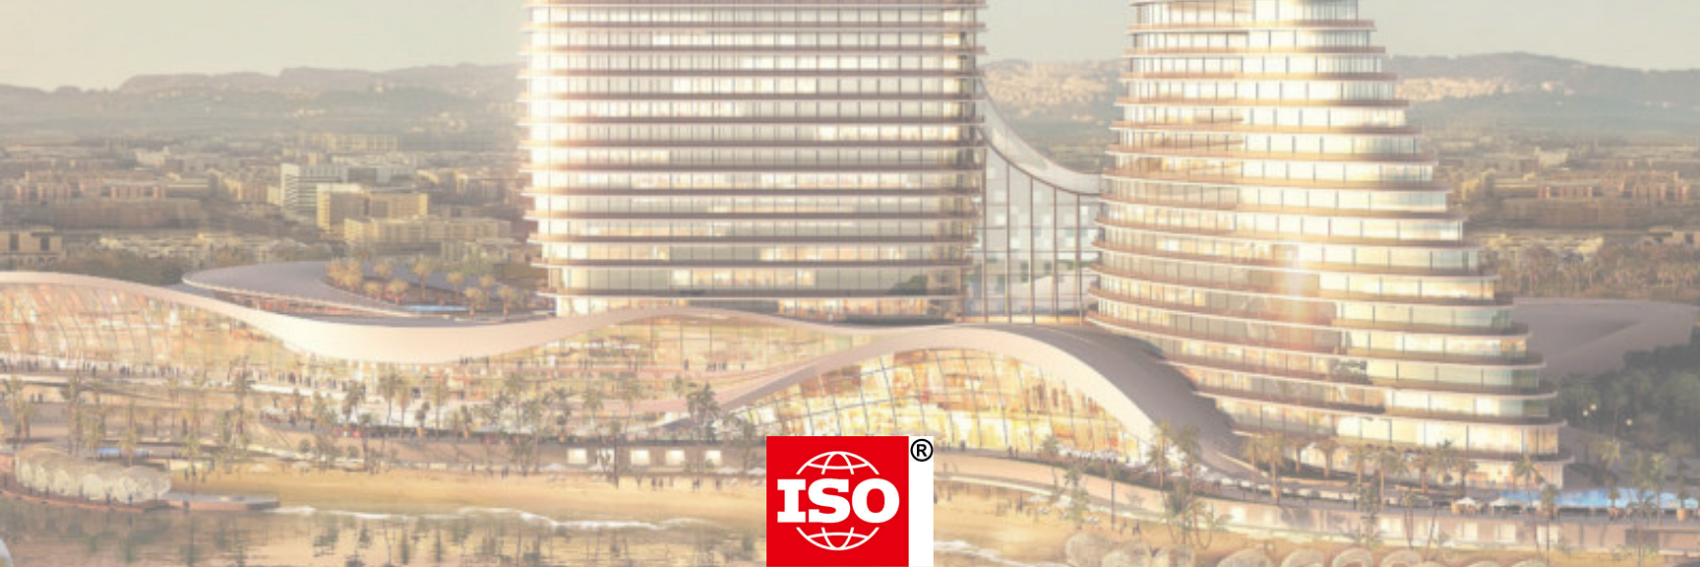 WME’s Saudi office – ISO Certified